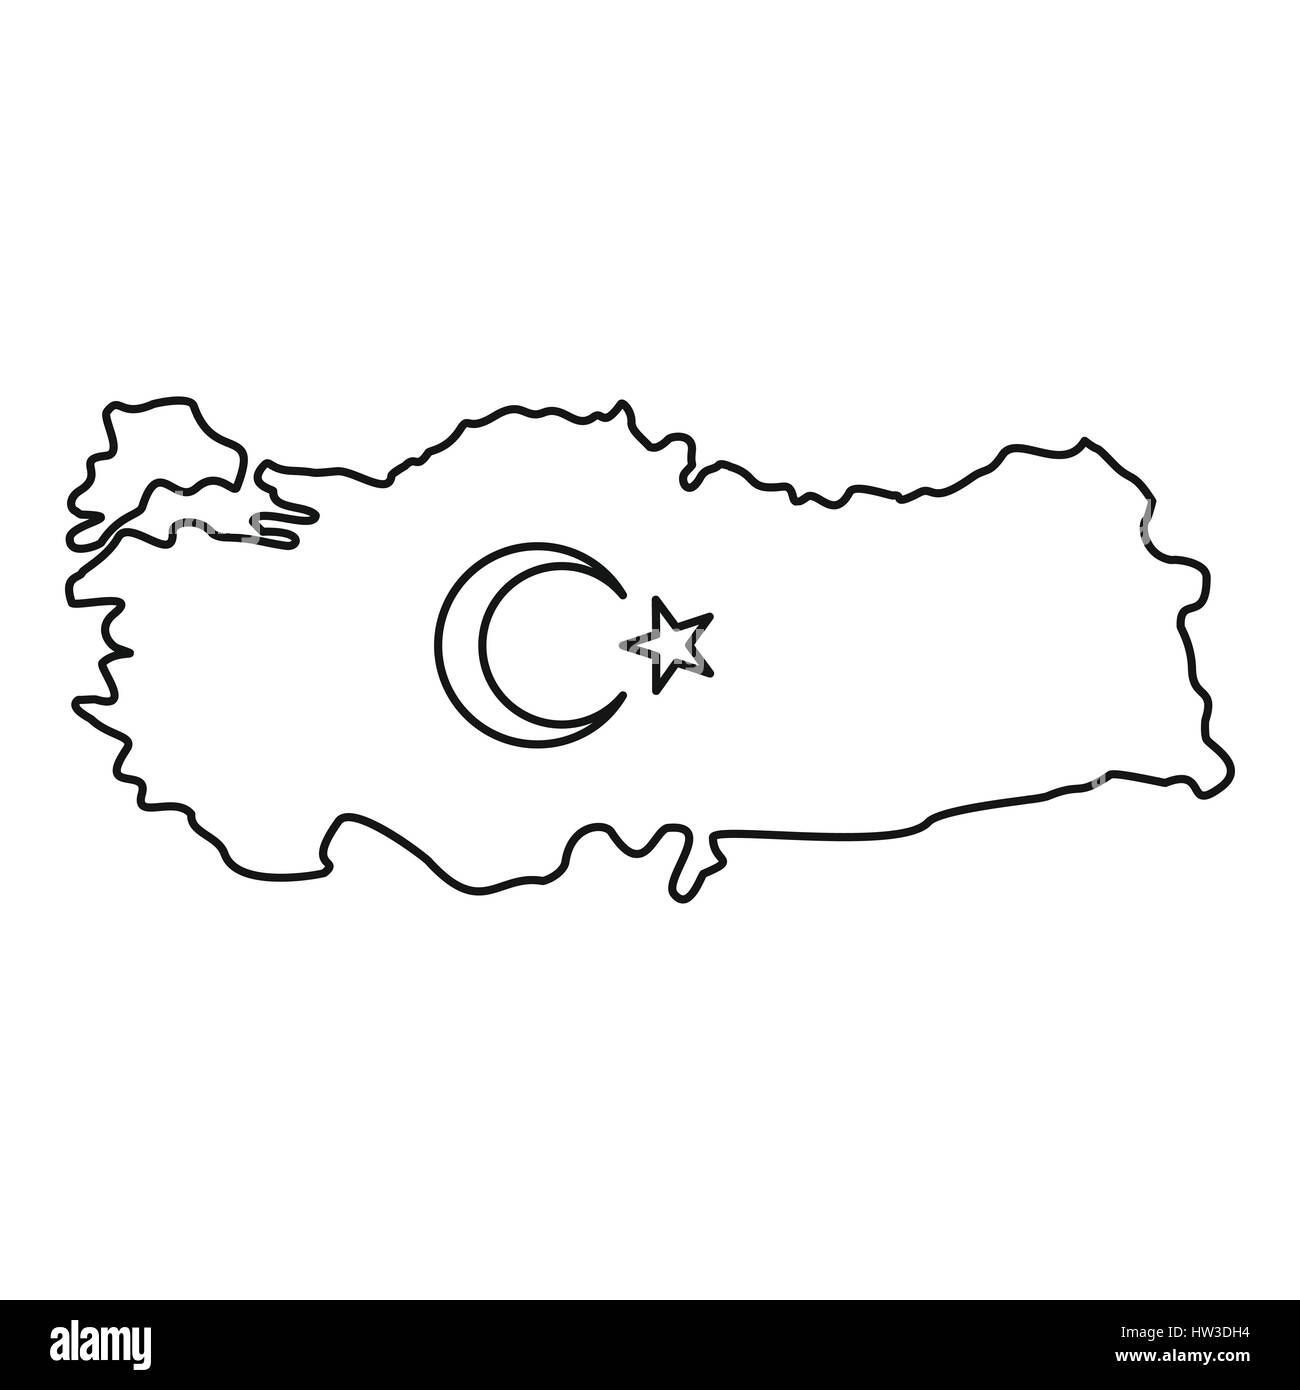 Karte von Türkei-Symbol, Umriss-Stil Stock-Vektorgrafik - Alamy